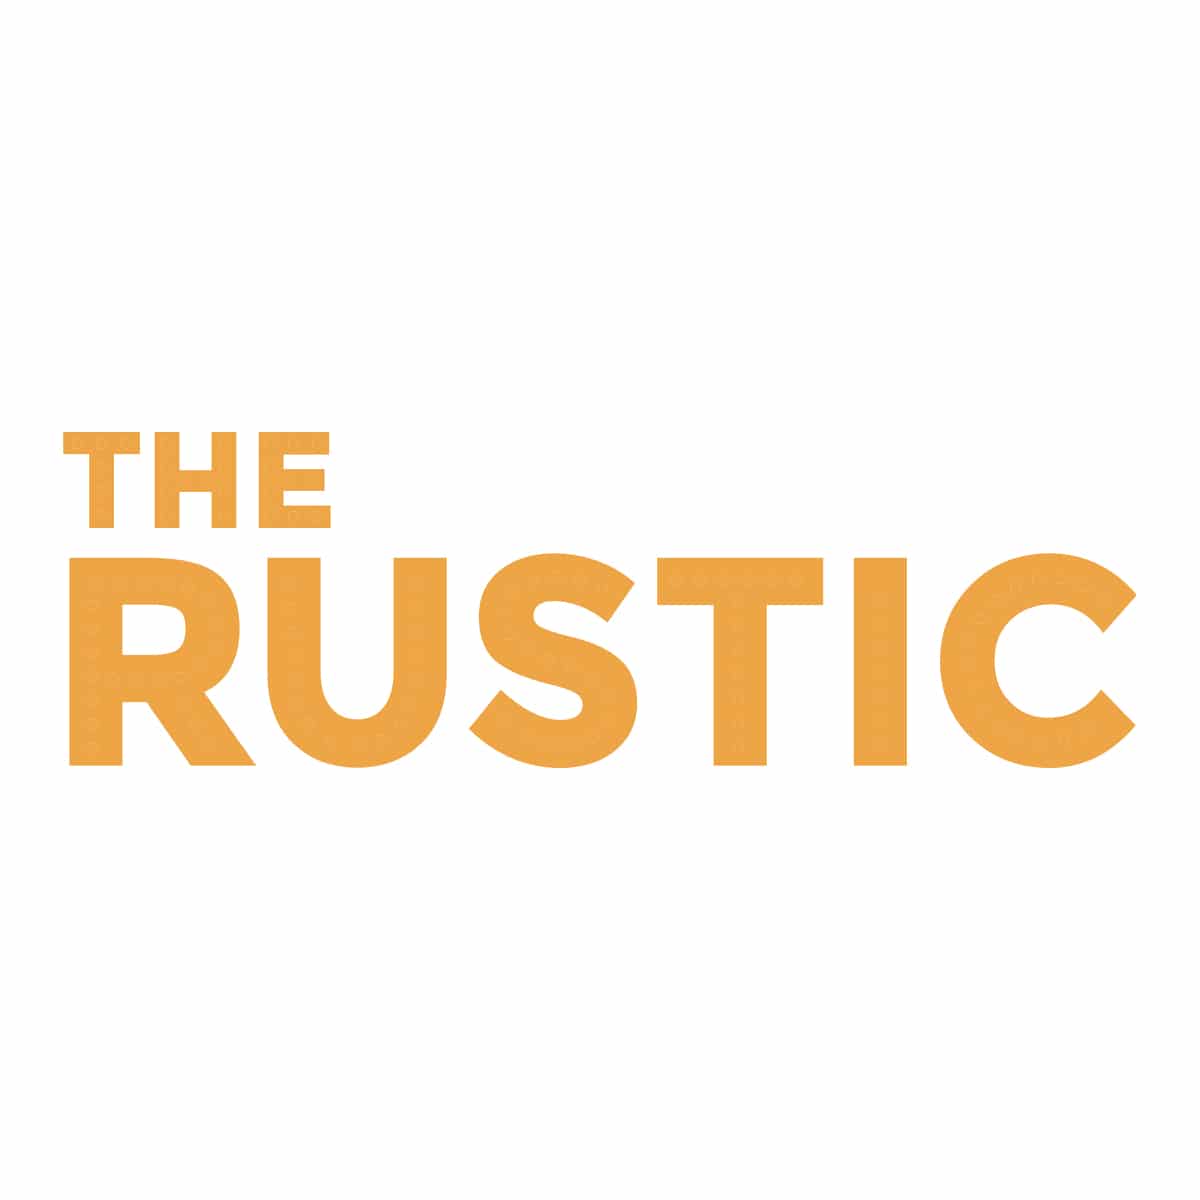 The Rustic logo